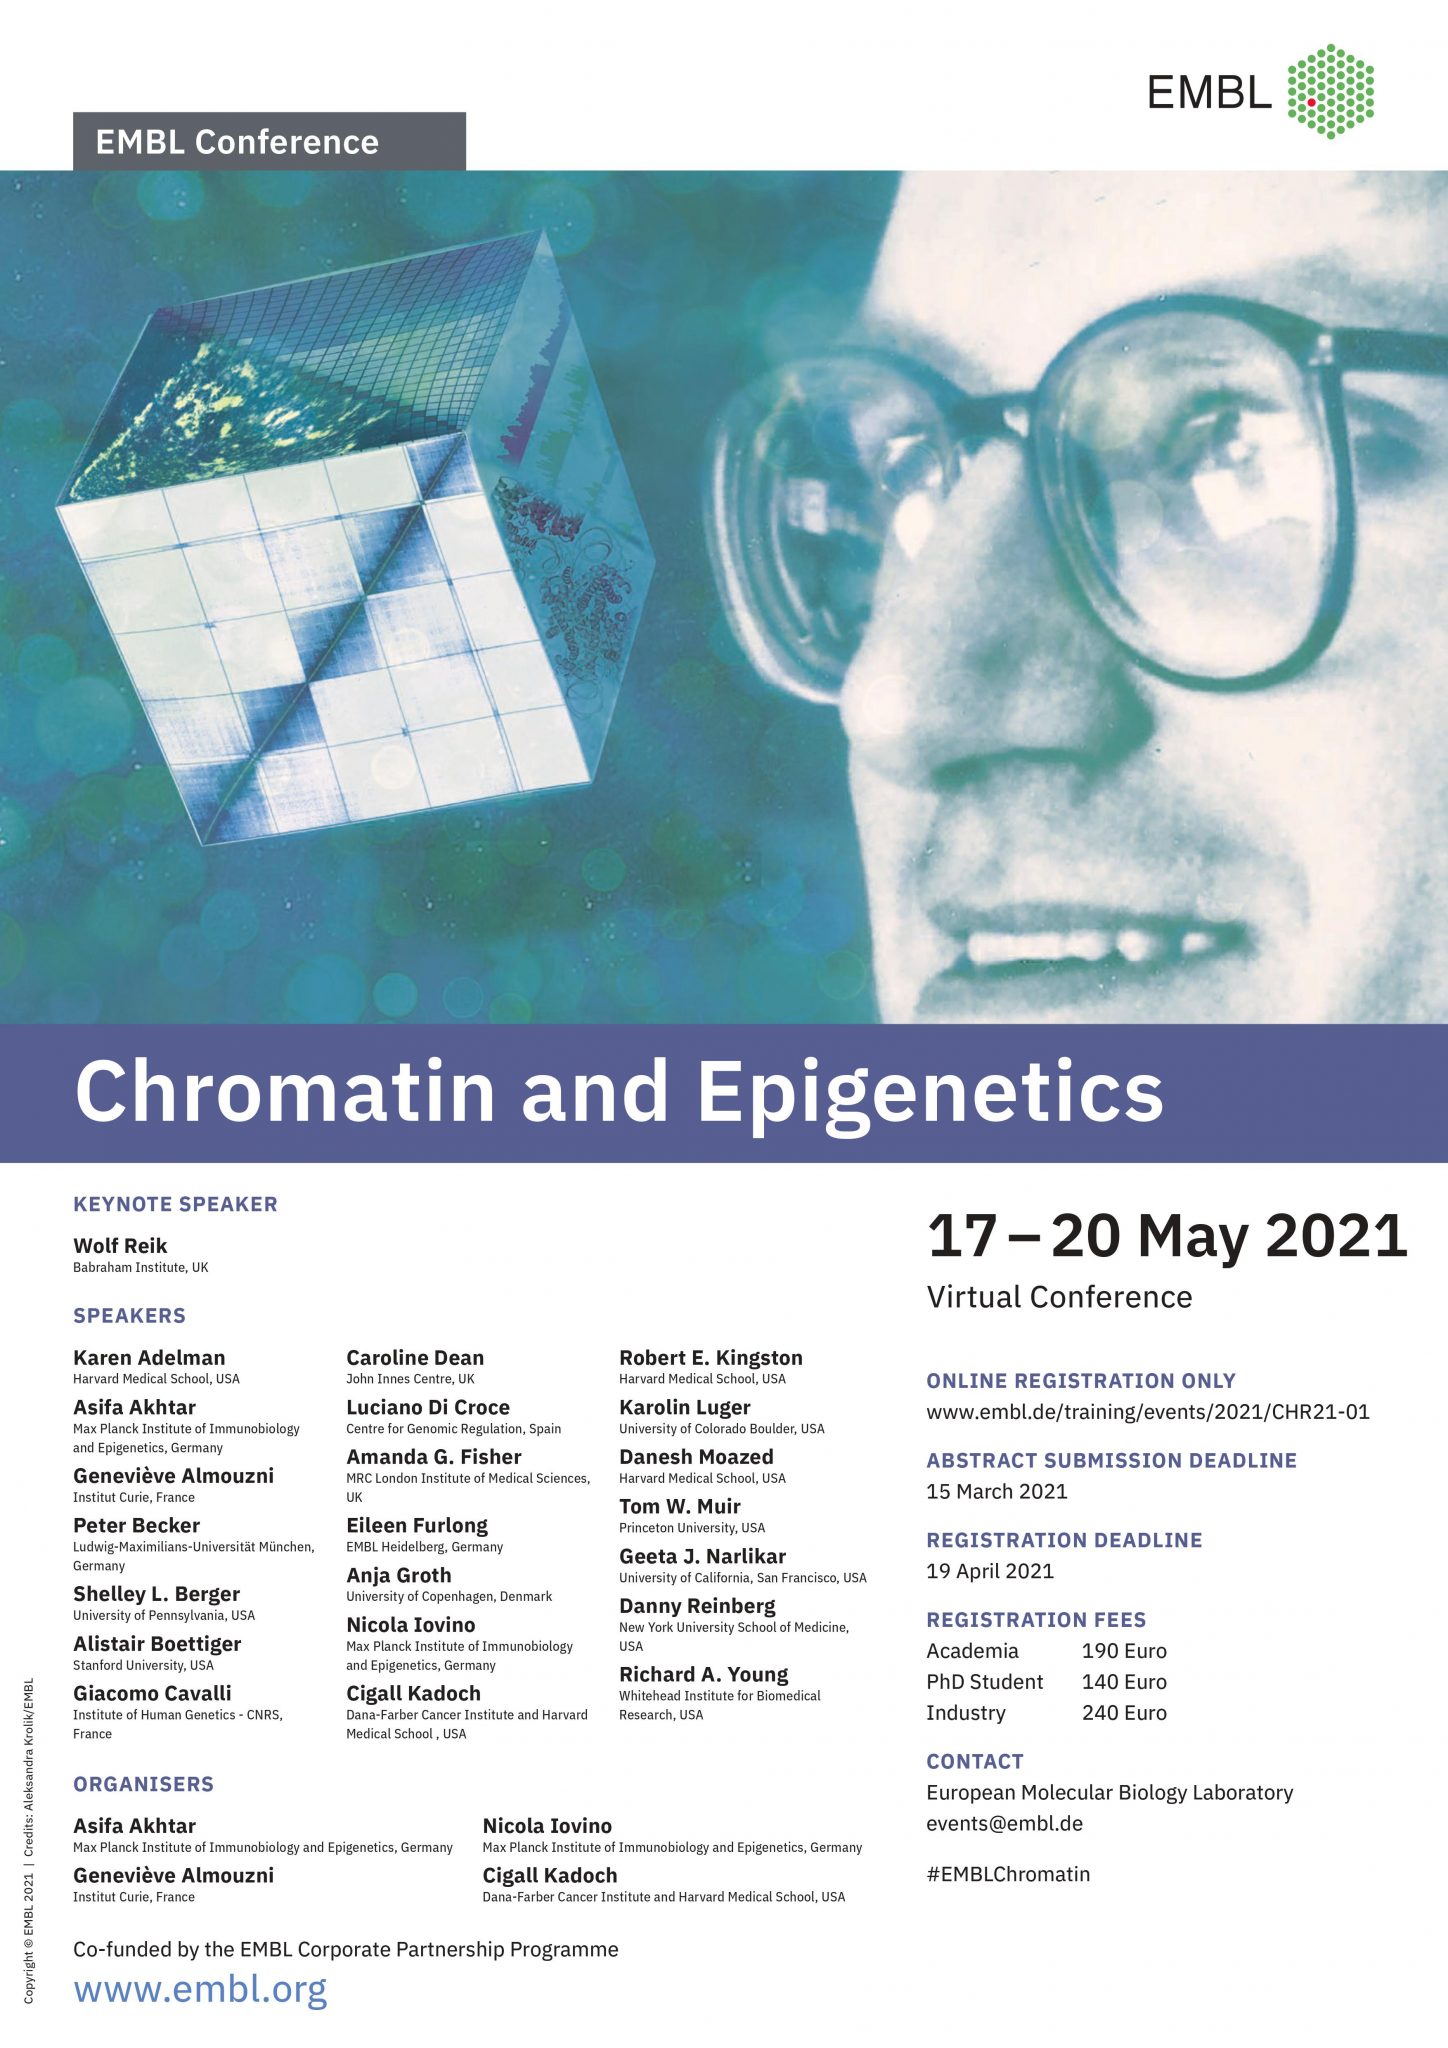 Chromatin and Epigenetics EMBL Conference